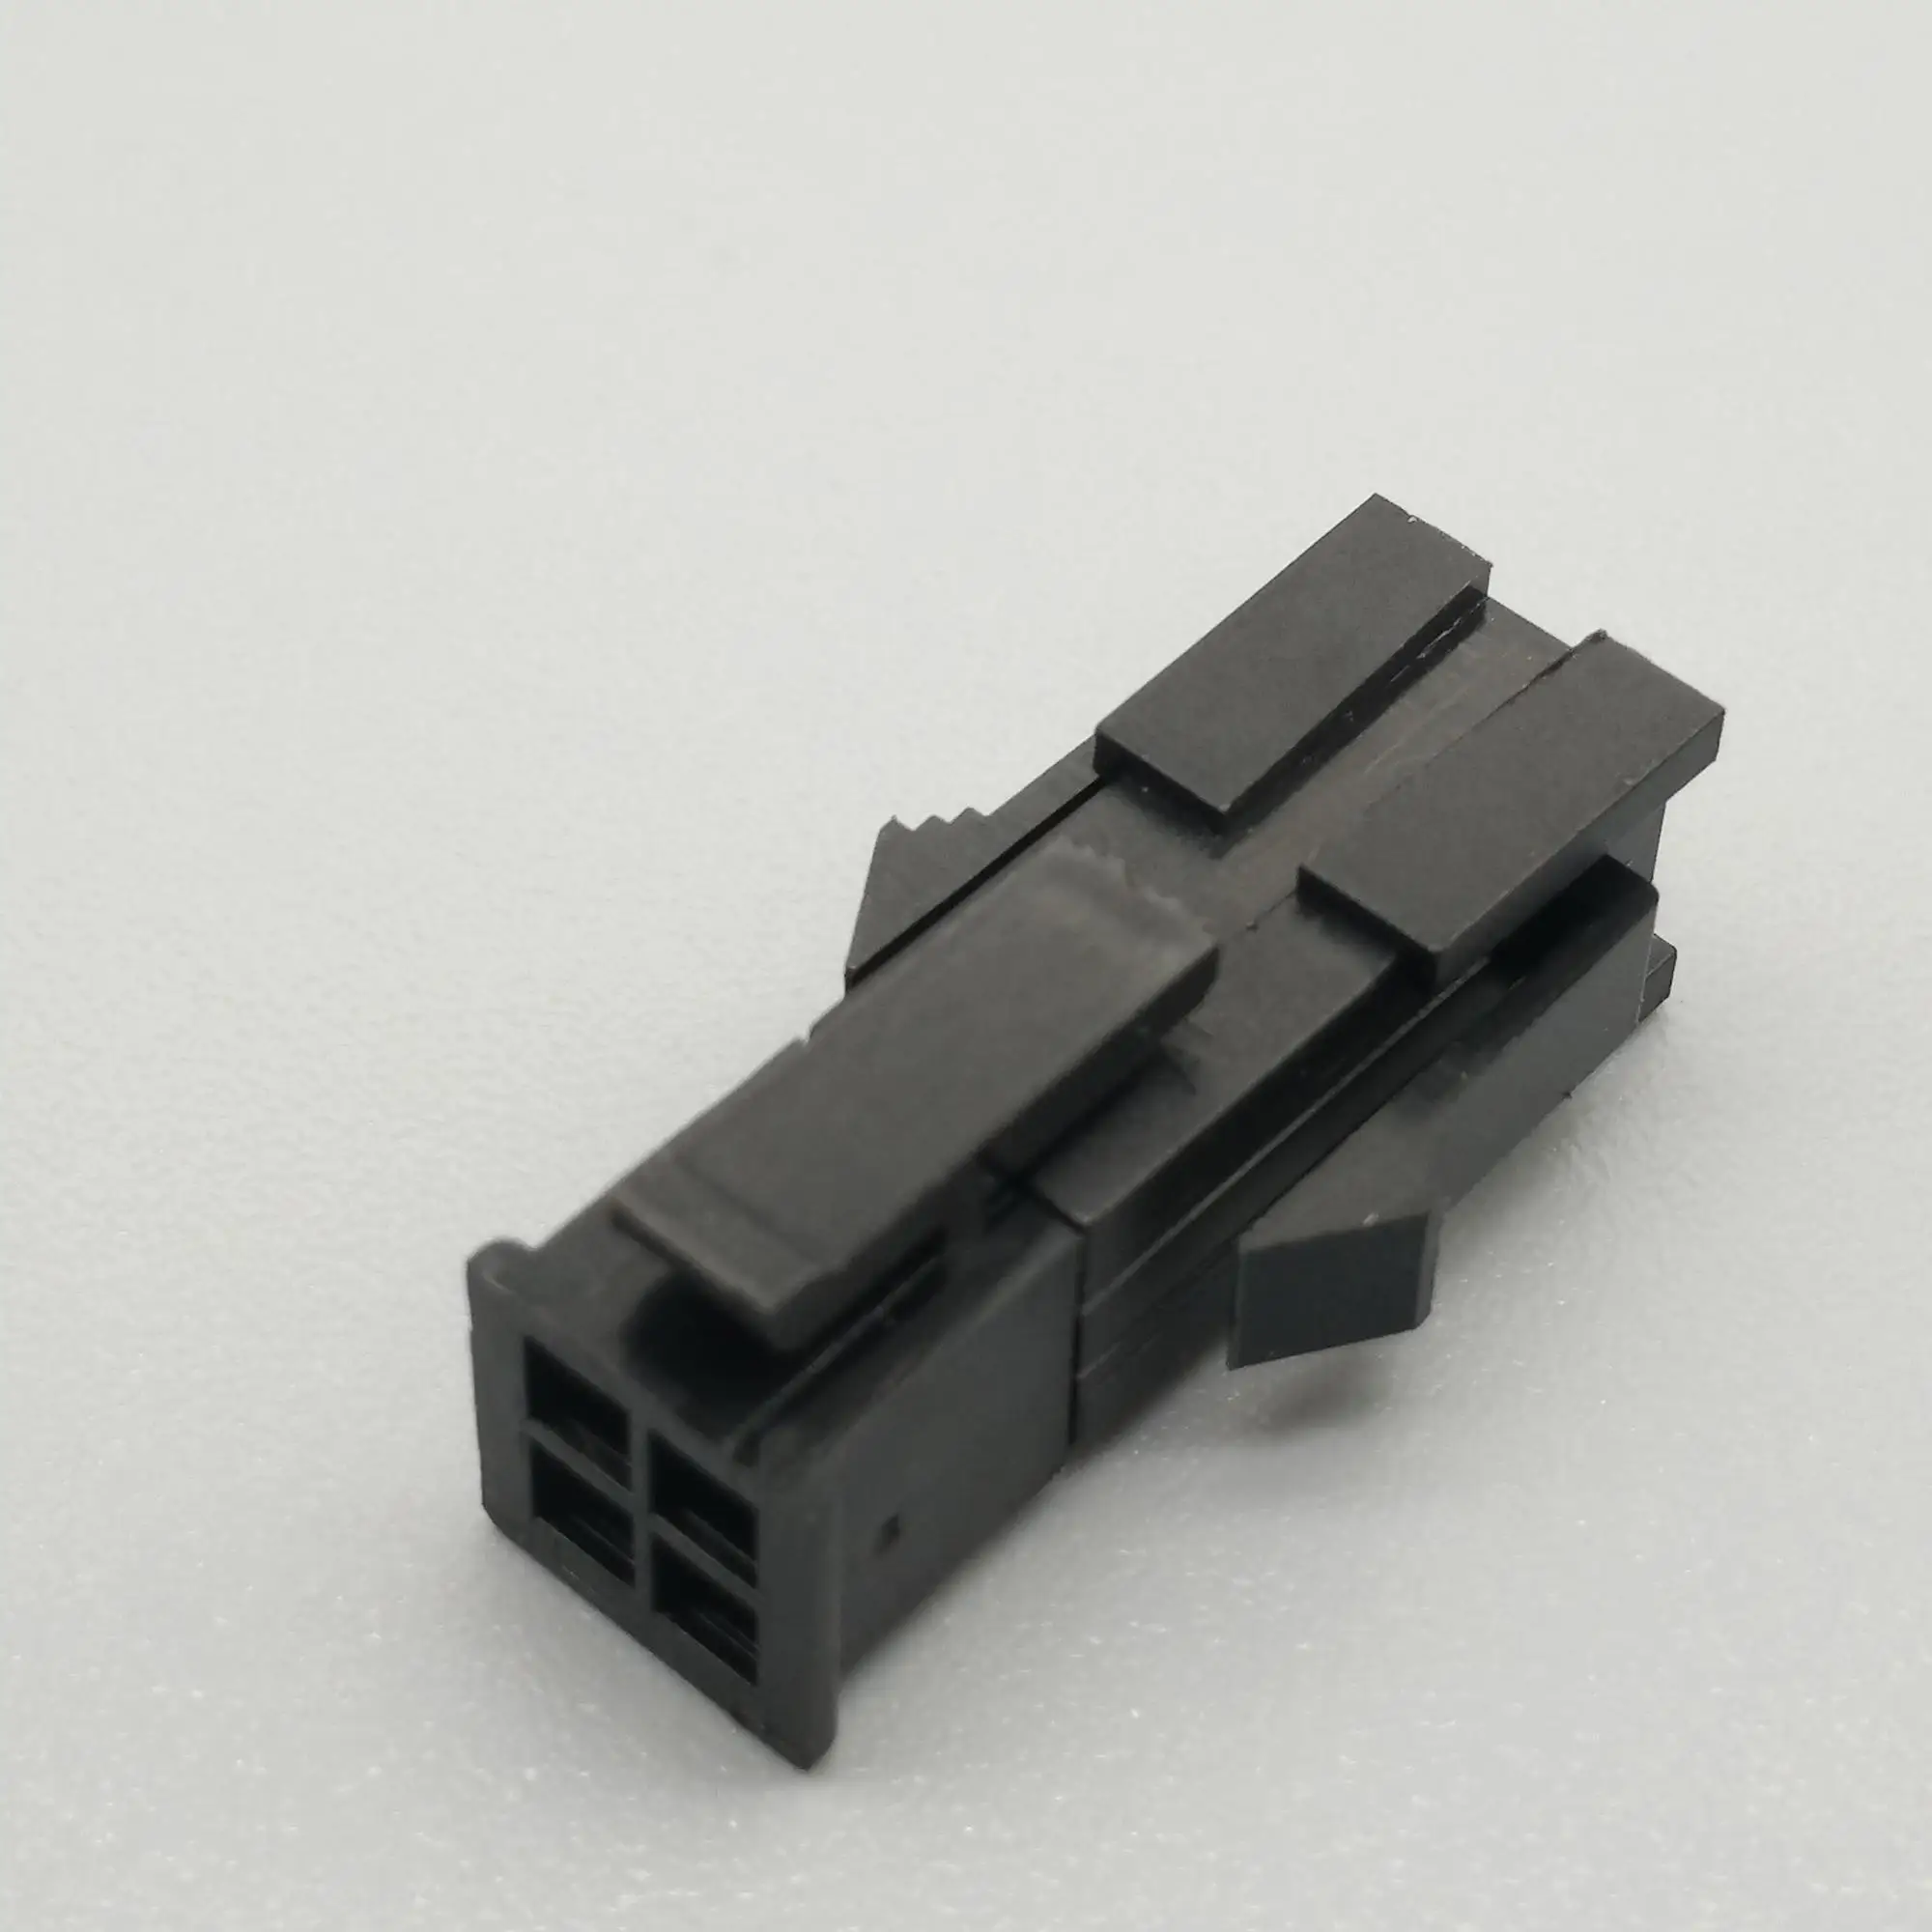 3.0 mm molex connector